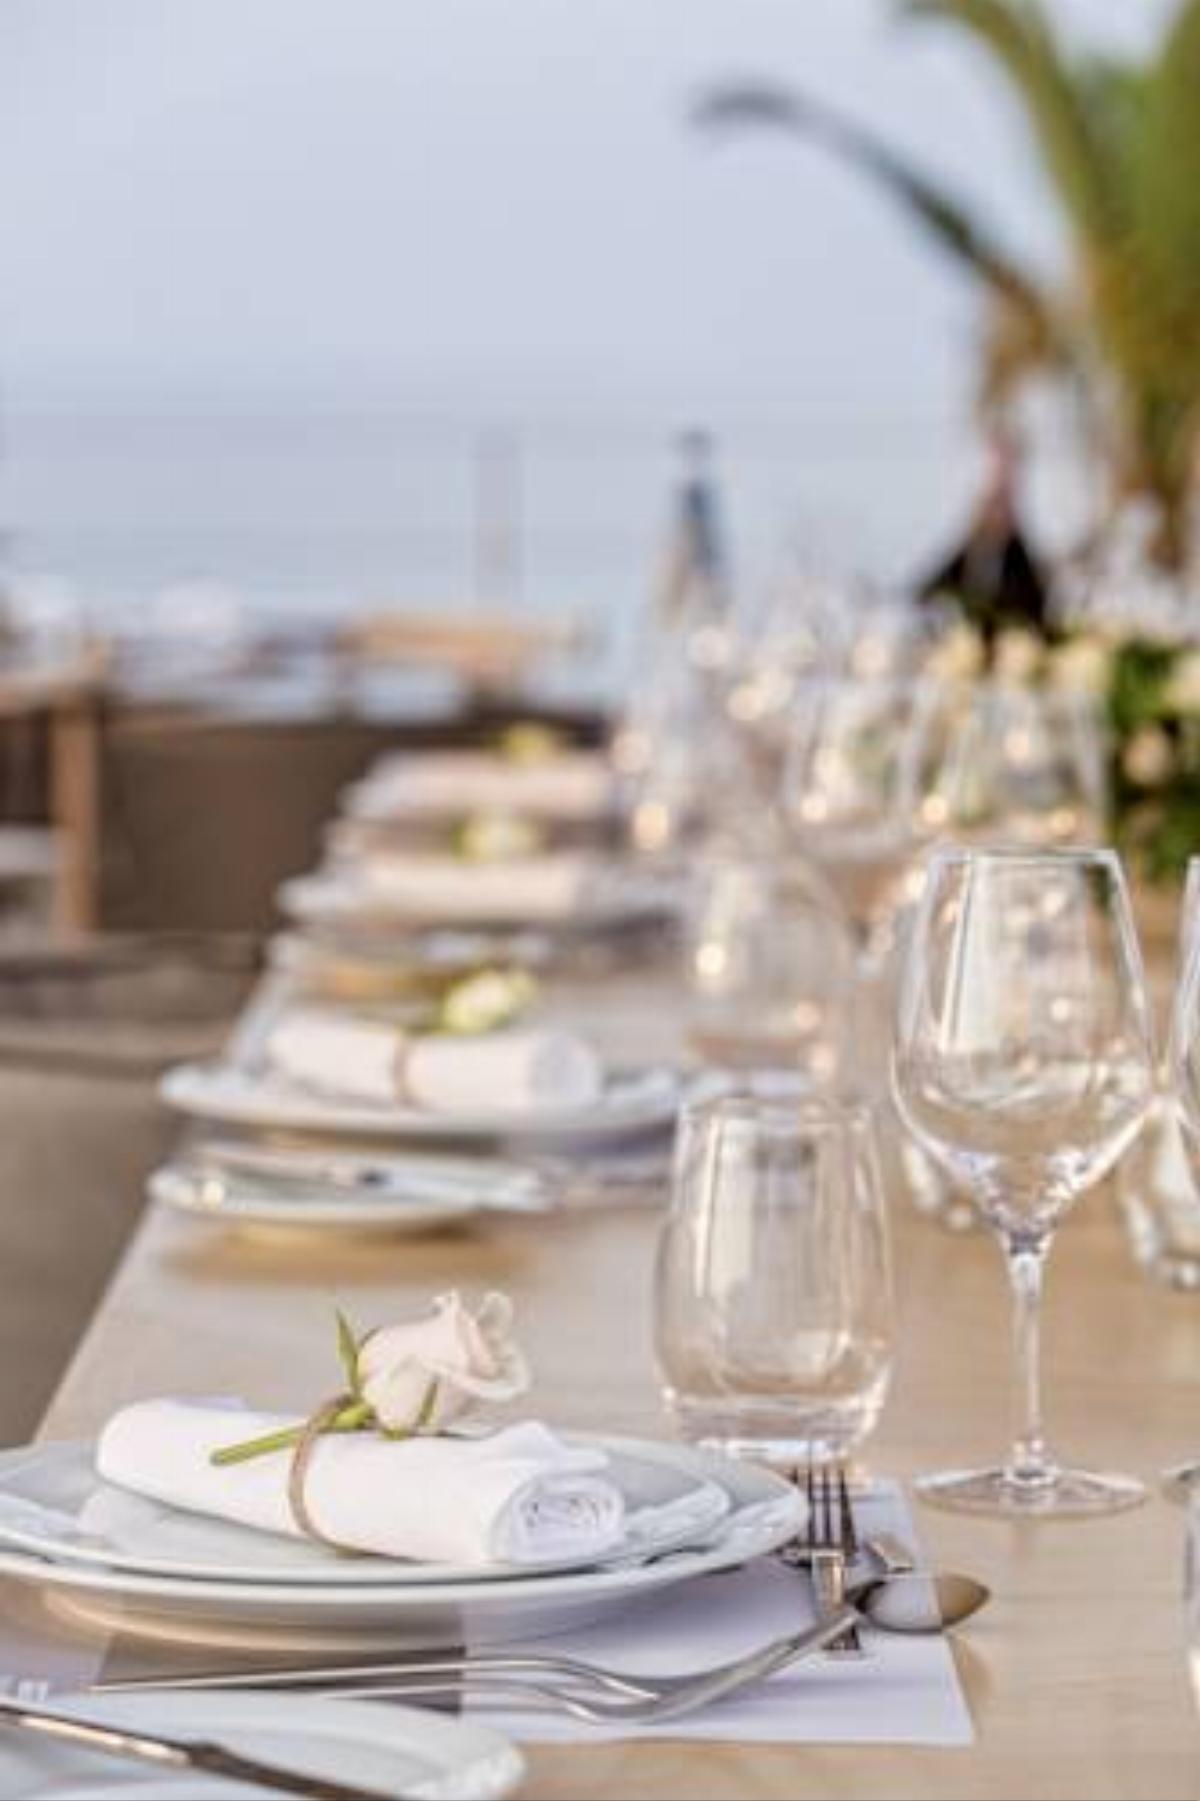 Horizon Blu Hotel Kalamáta Greece